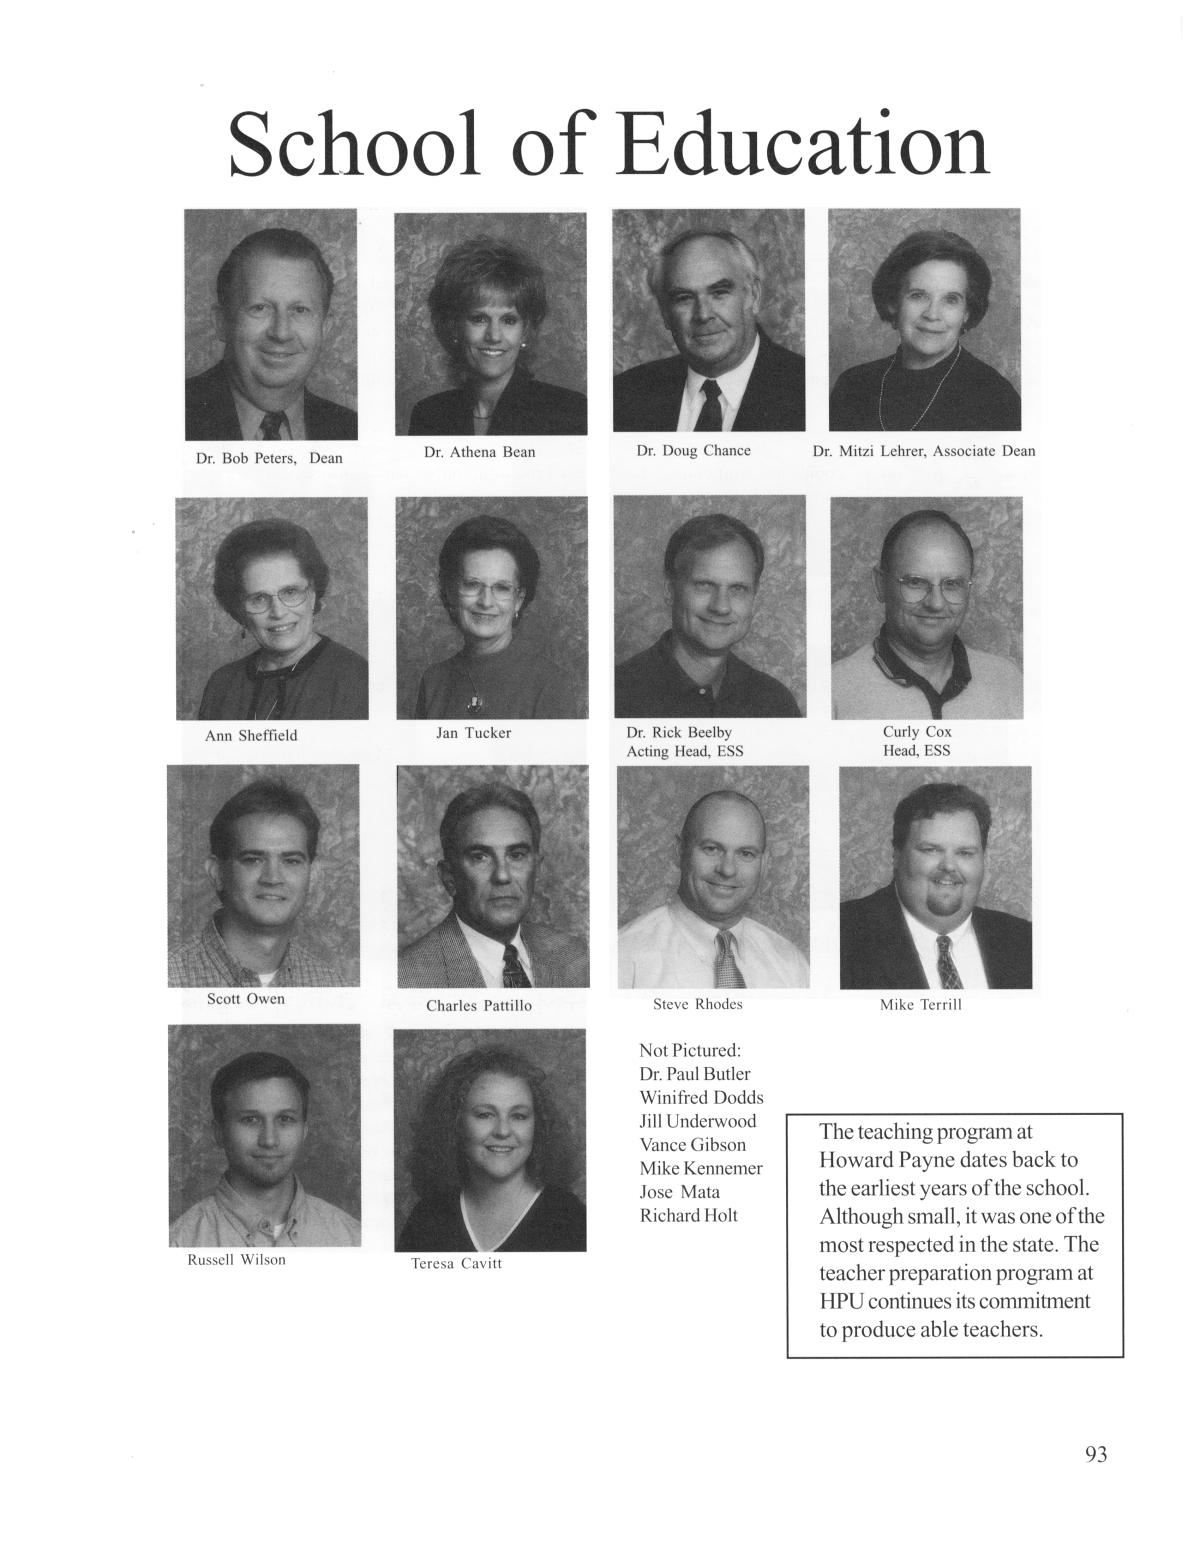 The Swarm, Yearbook of Howard Payne University, 2002
                                                
                                                    93
                                                